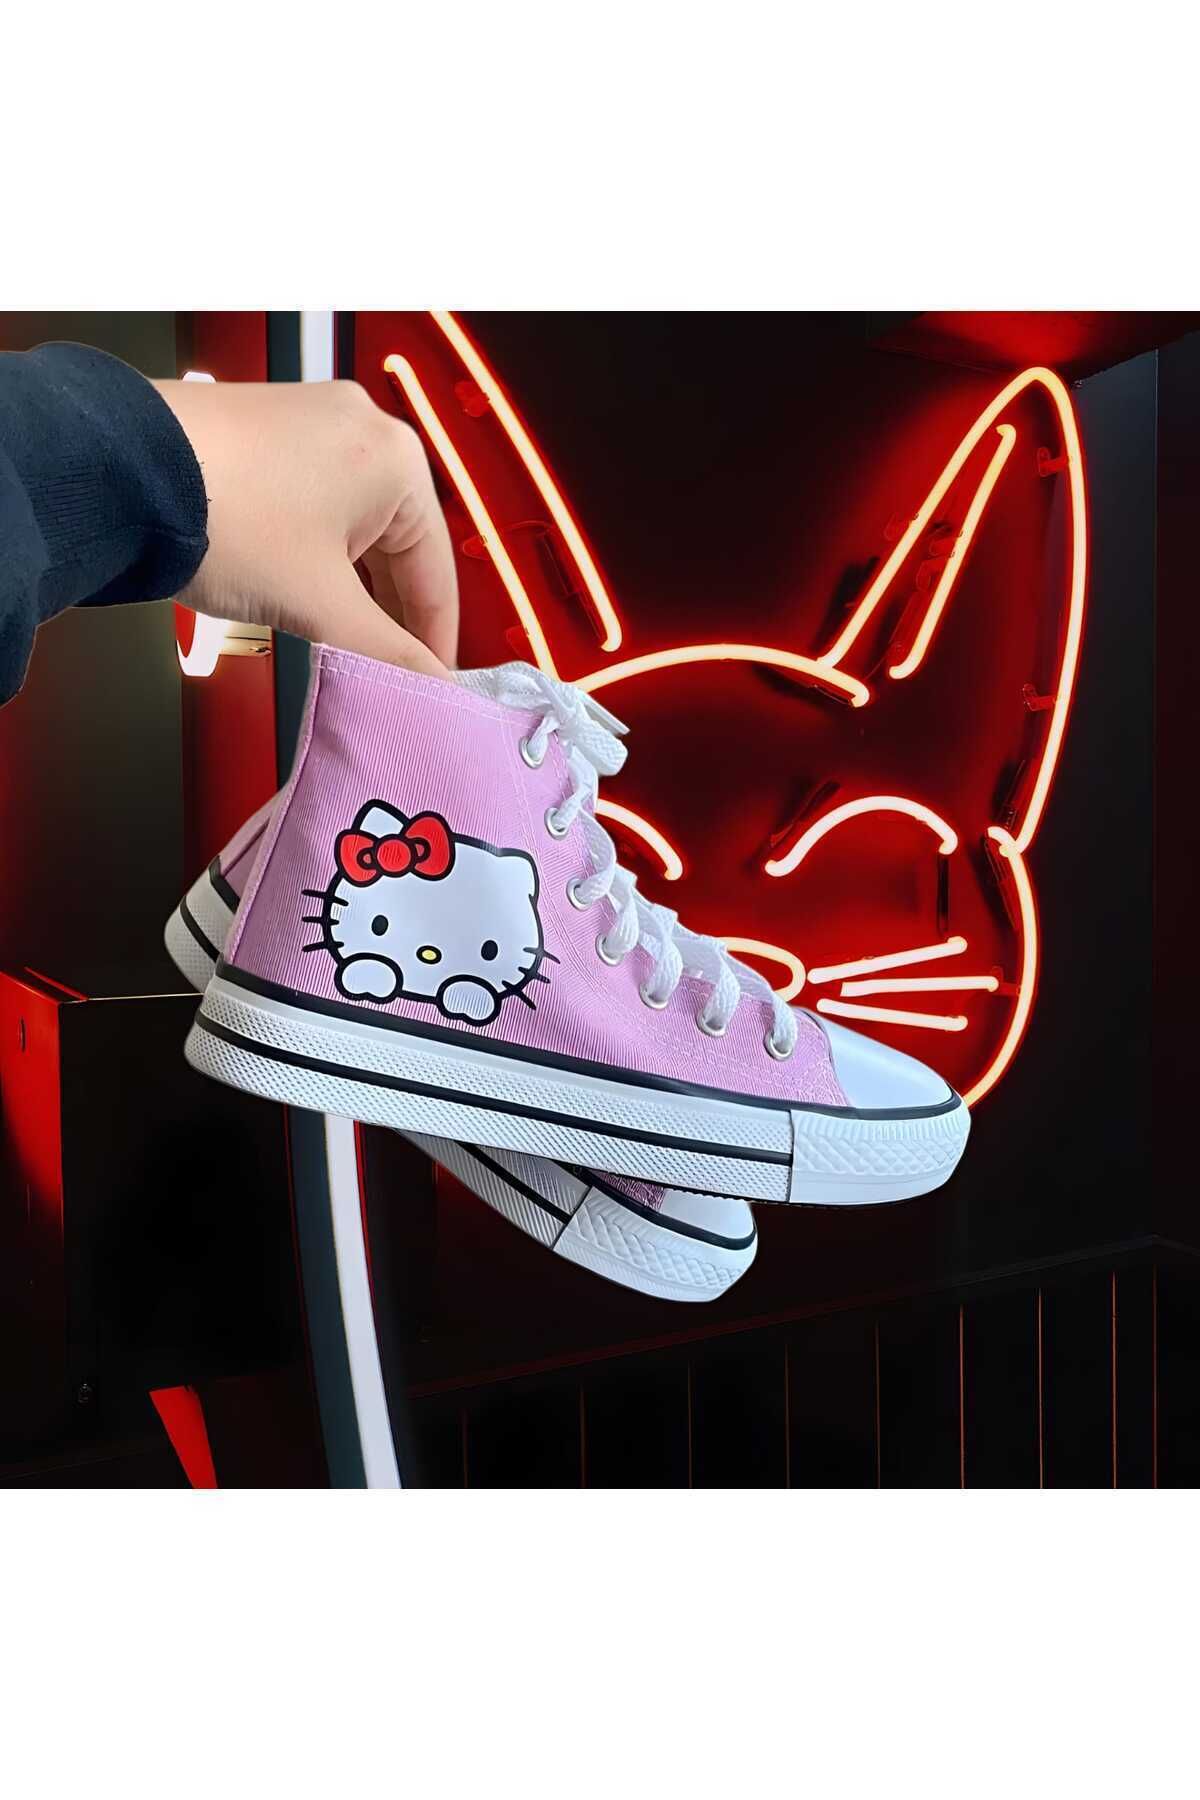 Lideral Pembe Convers Hello Kitty Baskılı Kanvas Ayakkabı